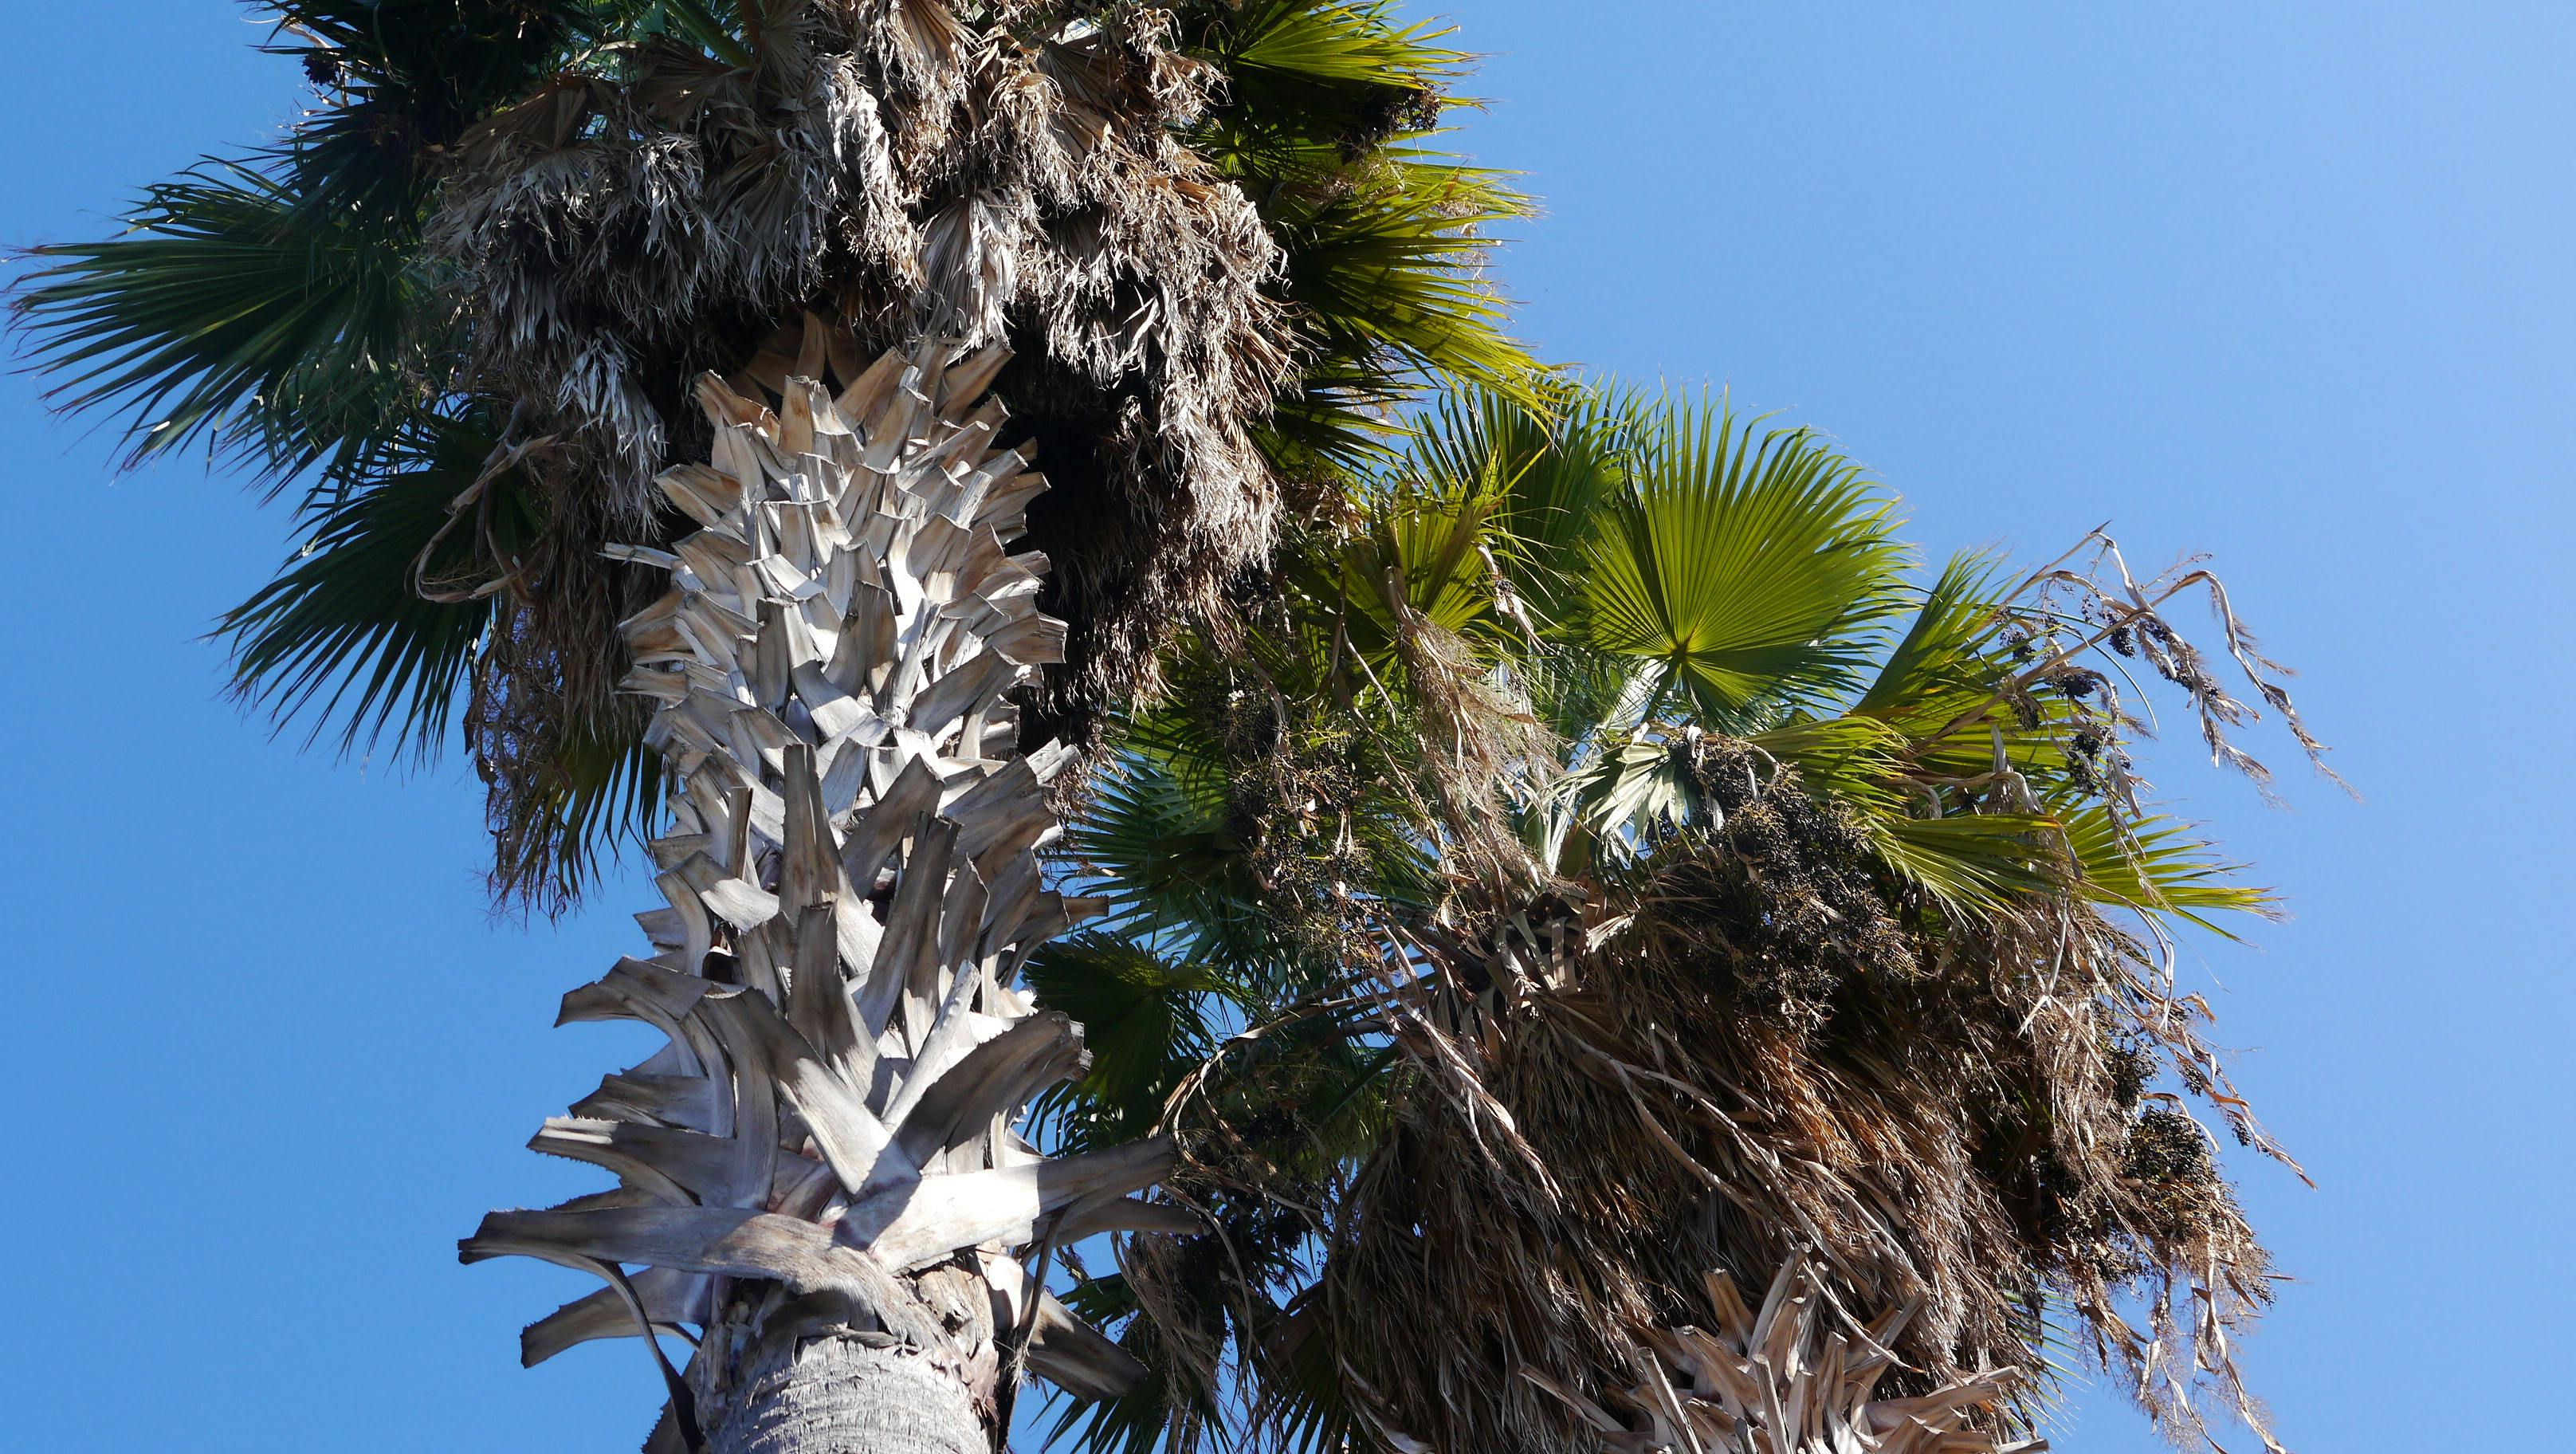 Free stock photo of palm tree, palm trees